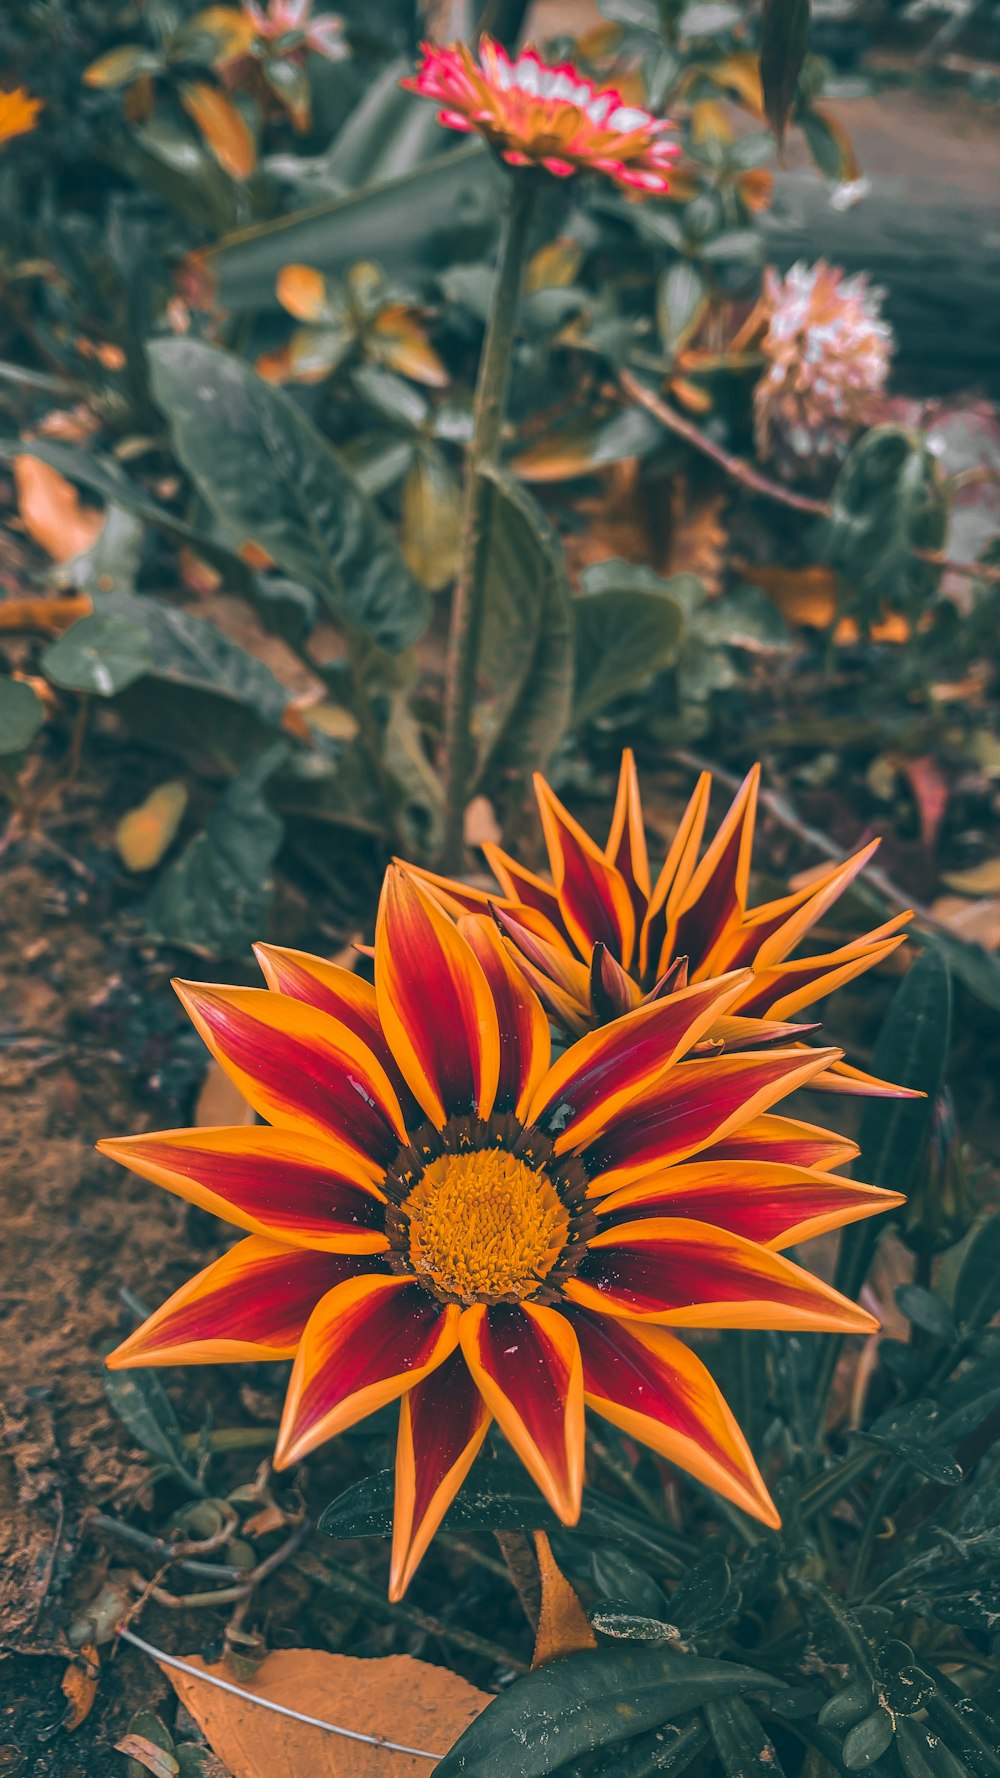 an orange and red flower in a garden